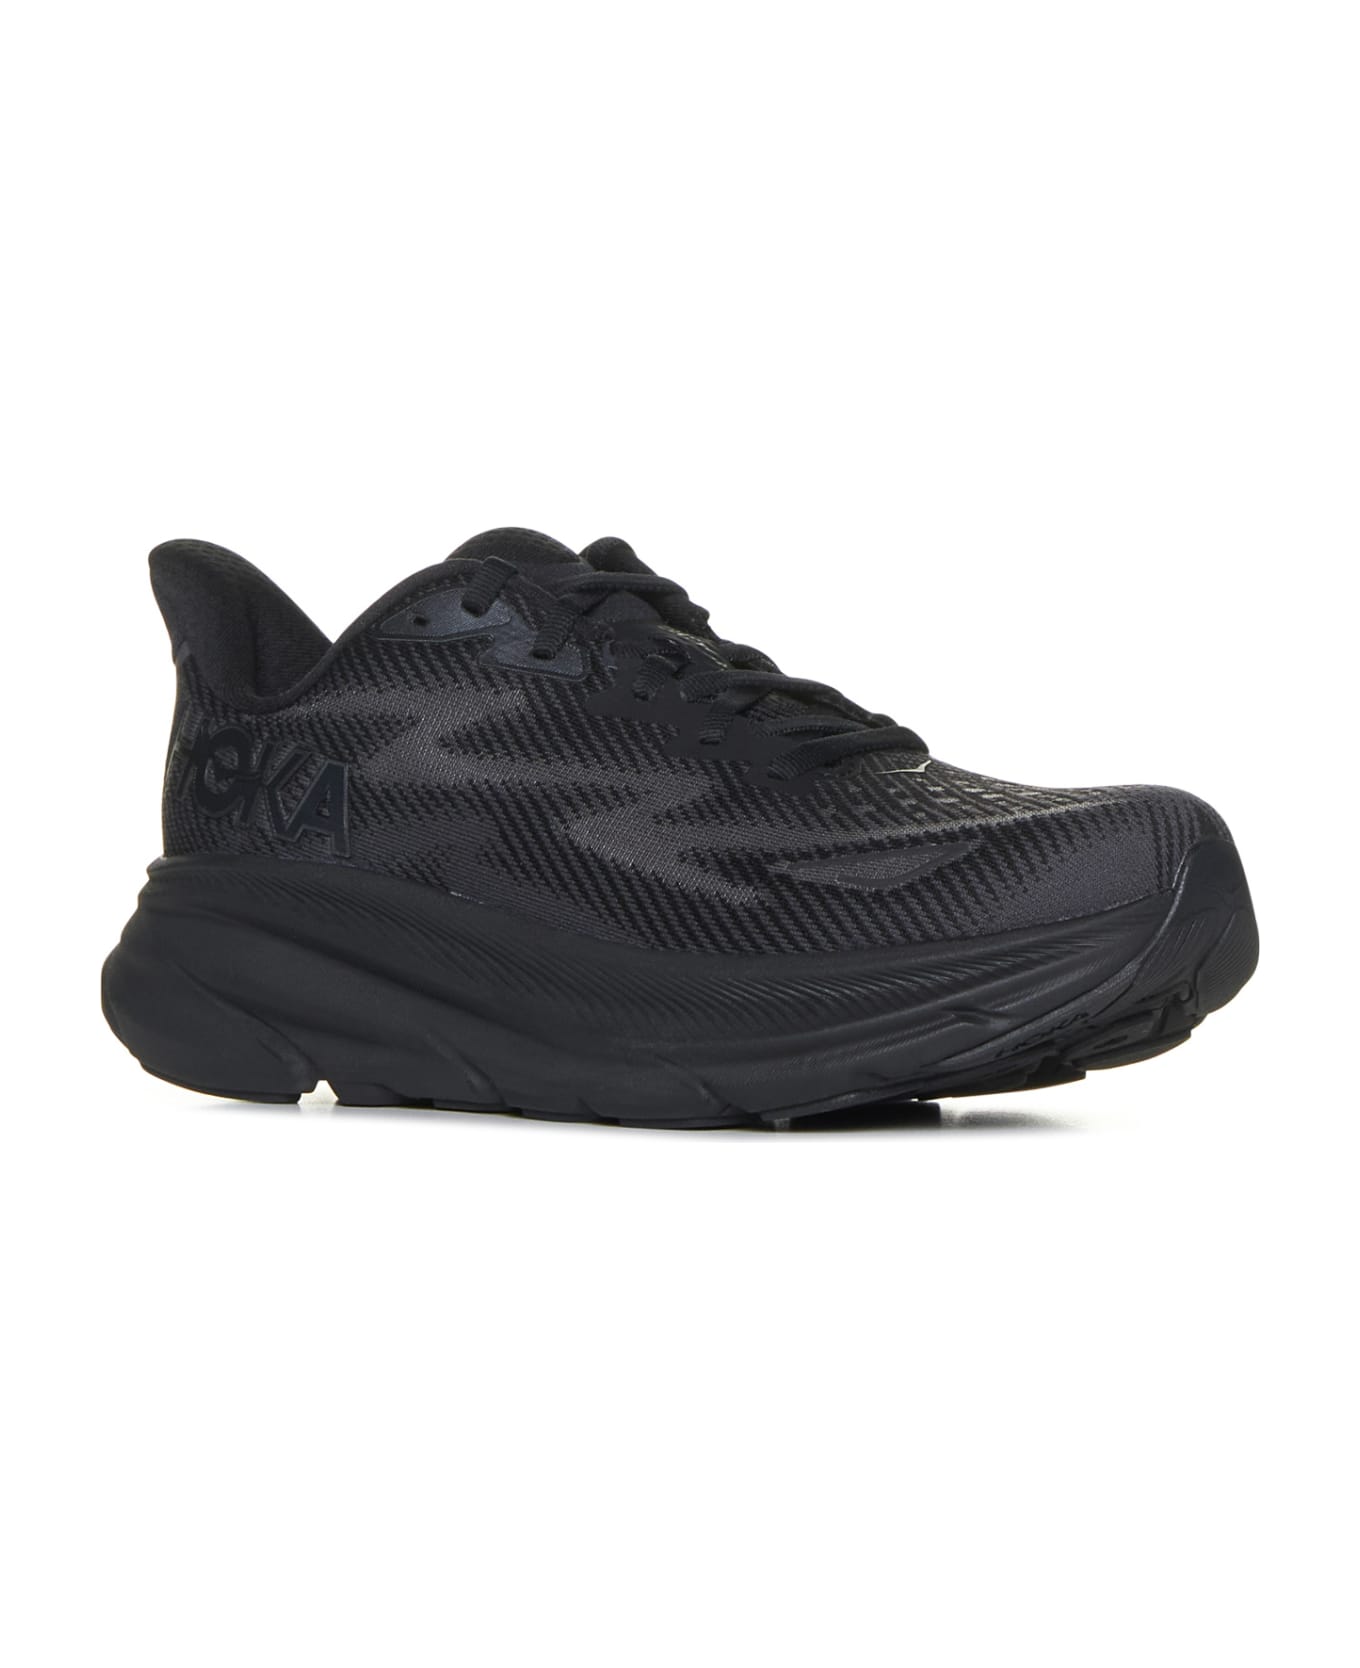 Hoka Sneakers - Black / black